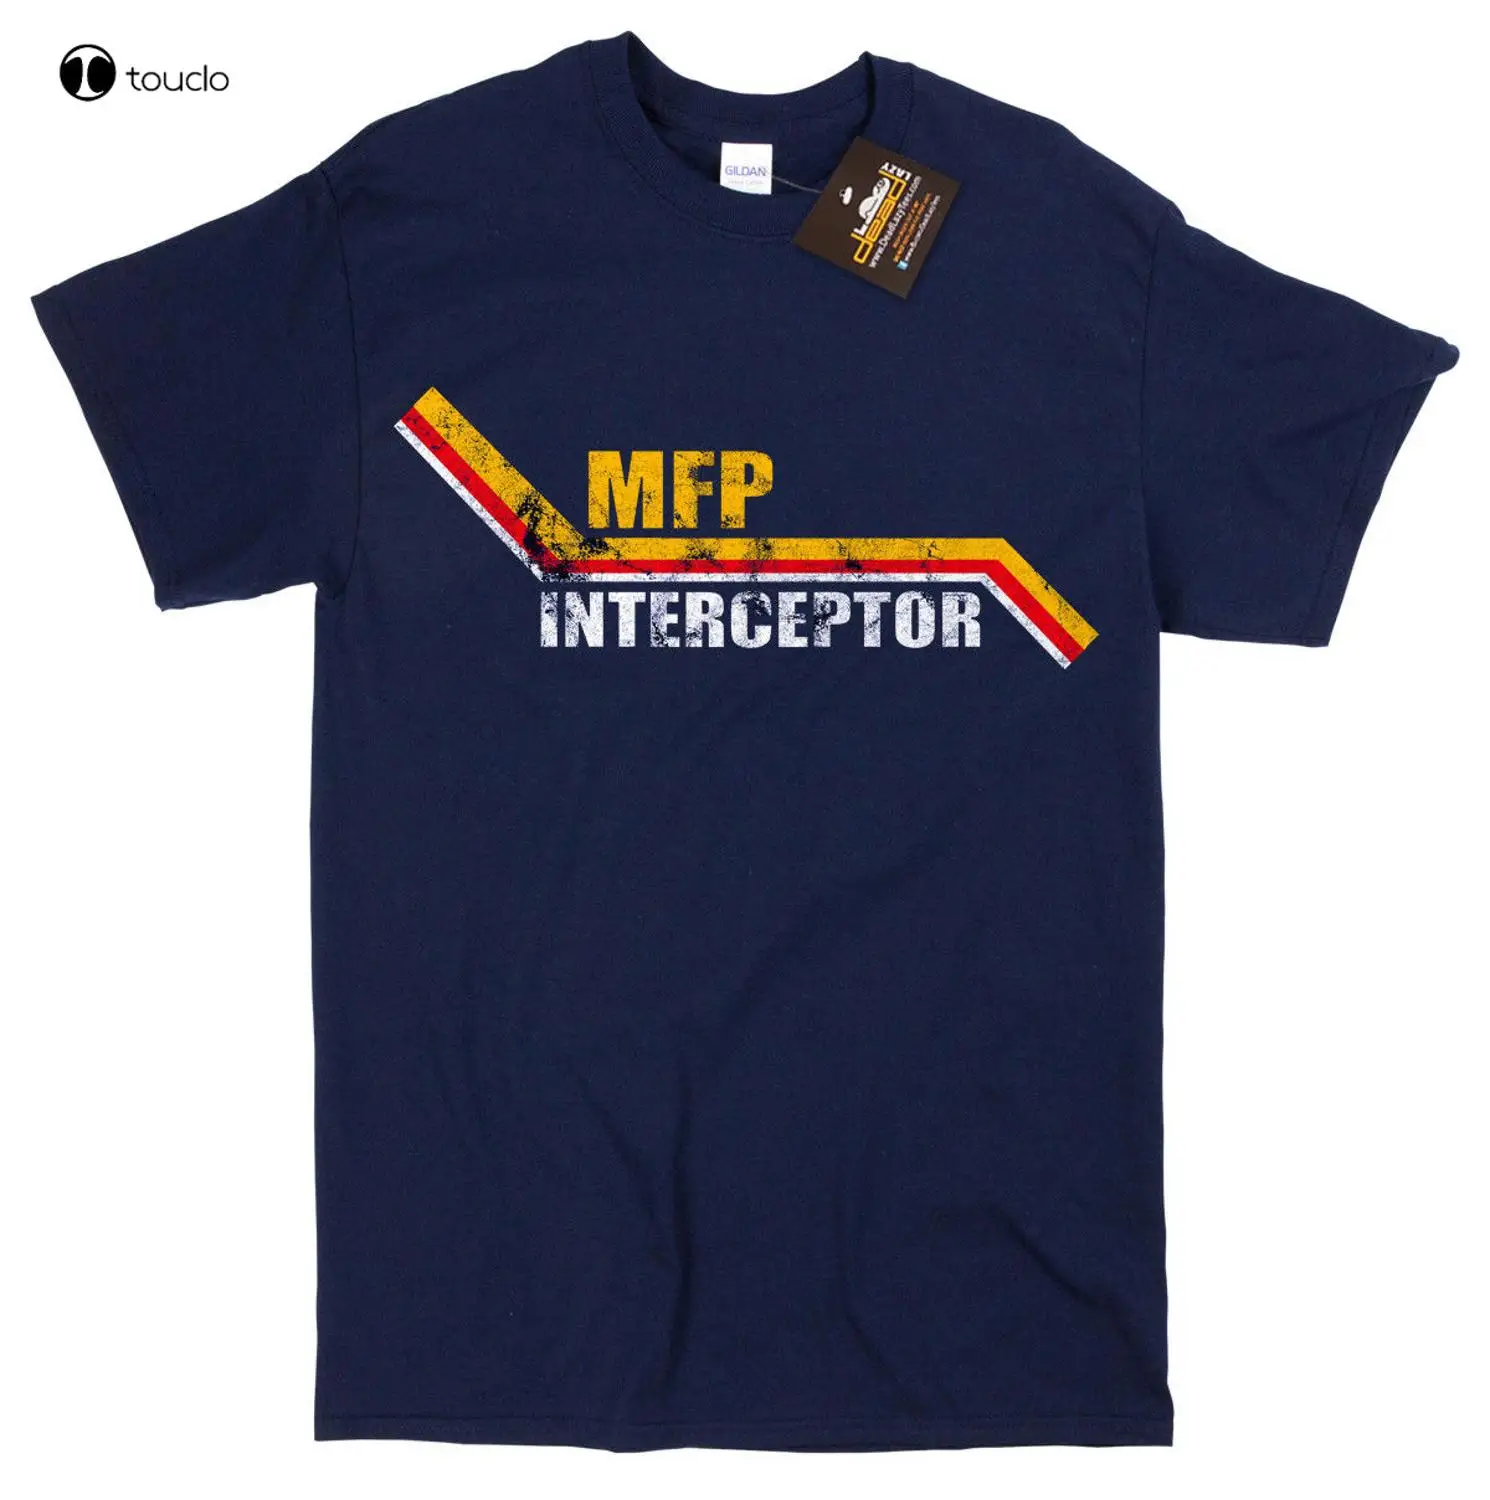 

Mad Max Mfp Interceptor Movie Inspired T Shirt - V8 Car Pursuit Navy Blue New